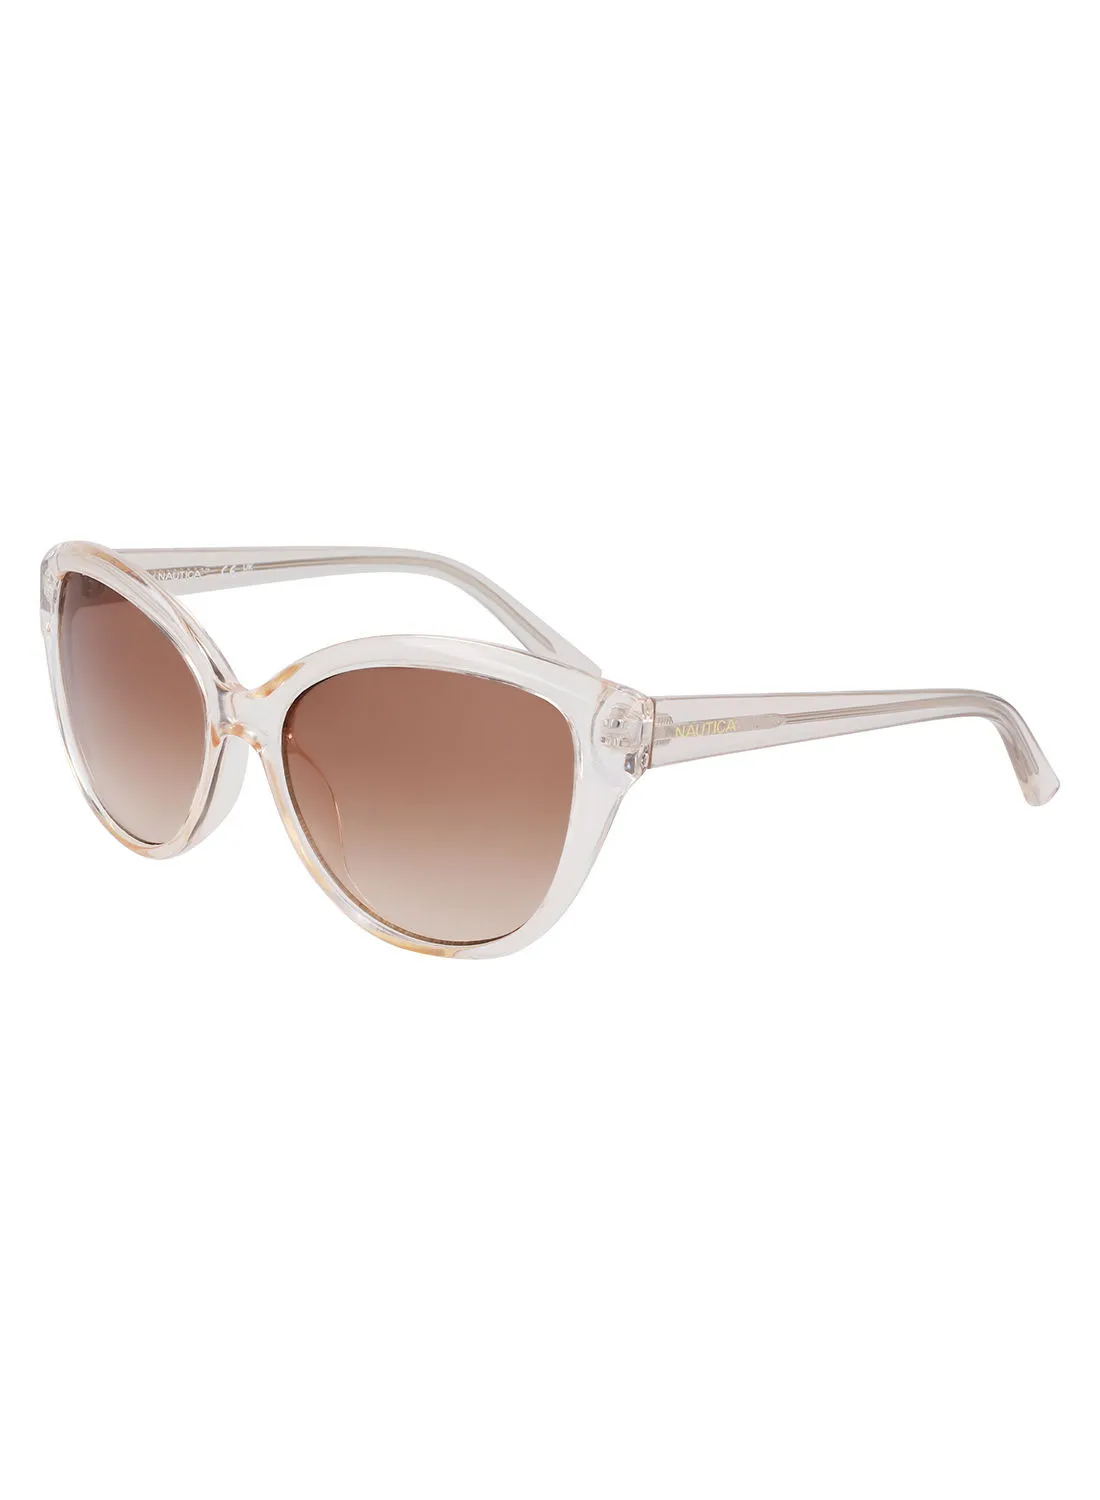 NAUTICA Women's Cat Eye Sunglasses - N2241S-270-5516 - Lens Size: 55 Mm